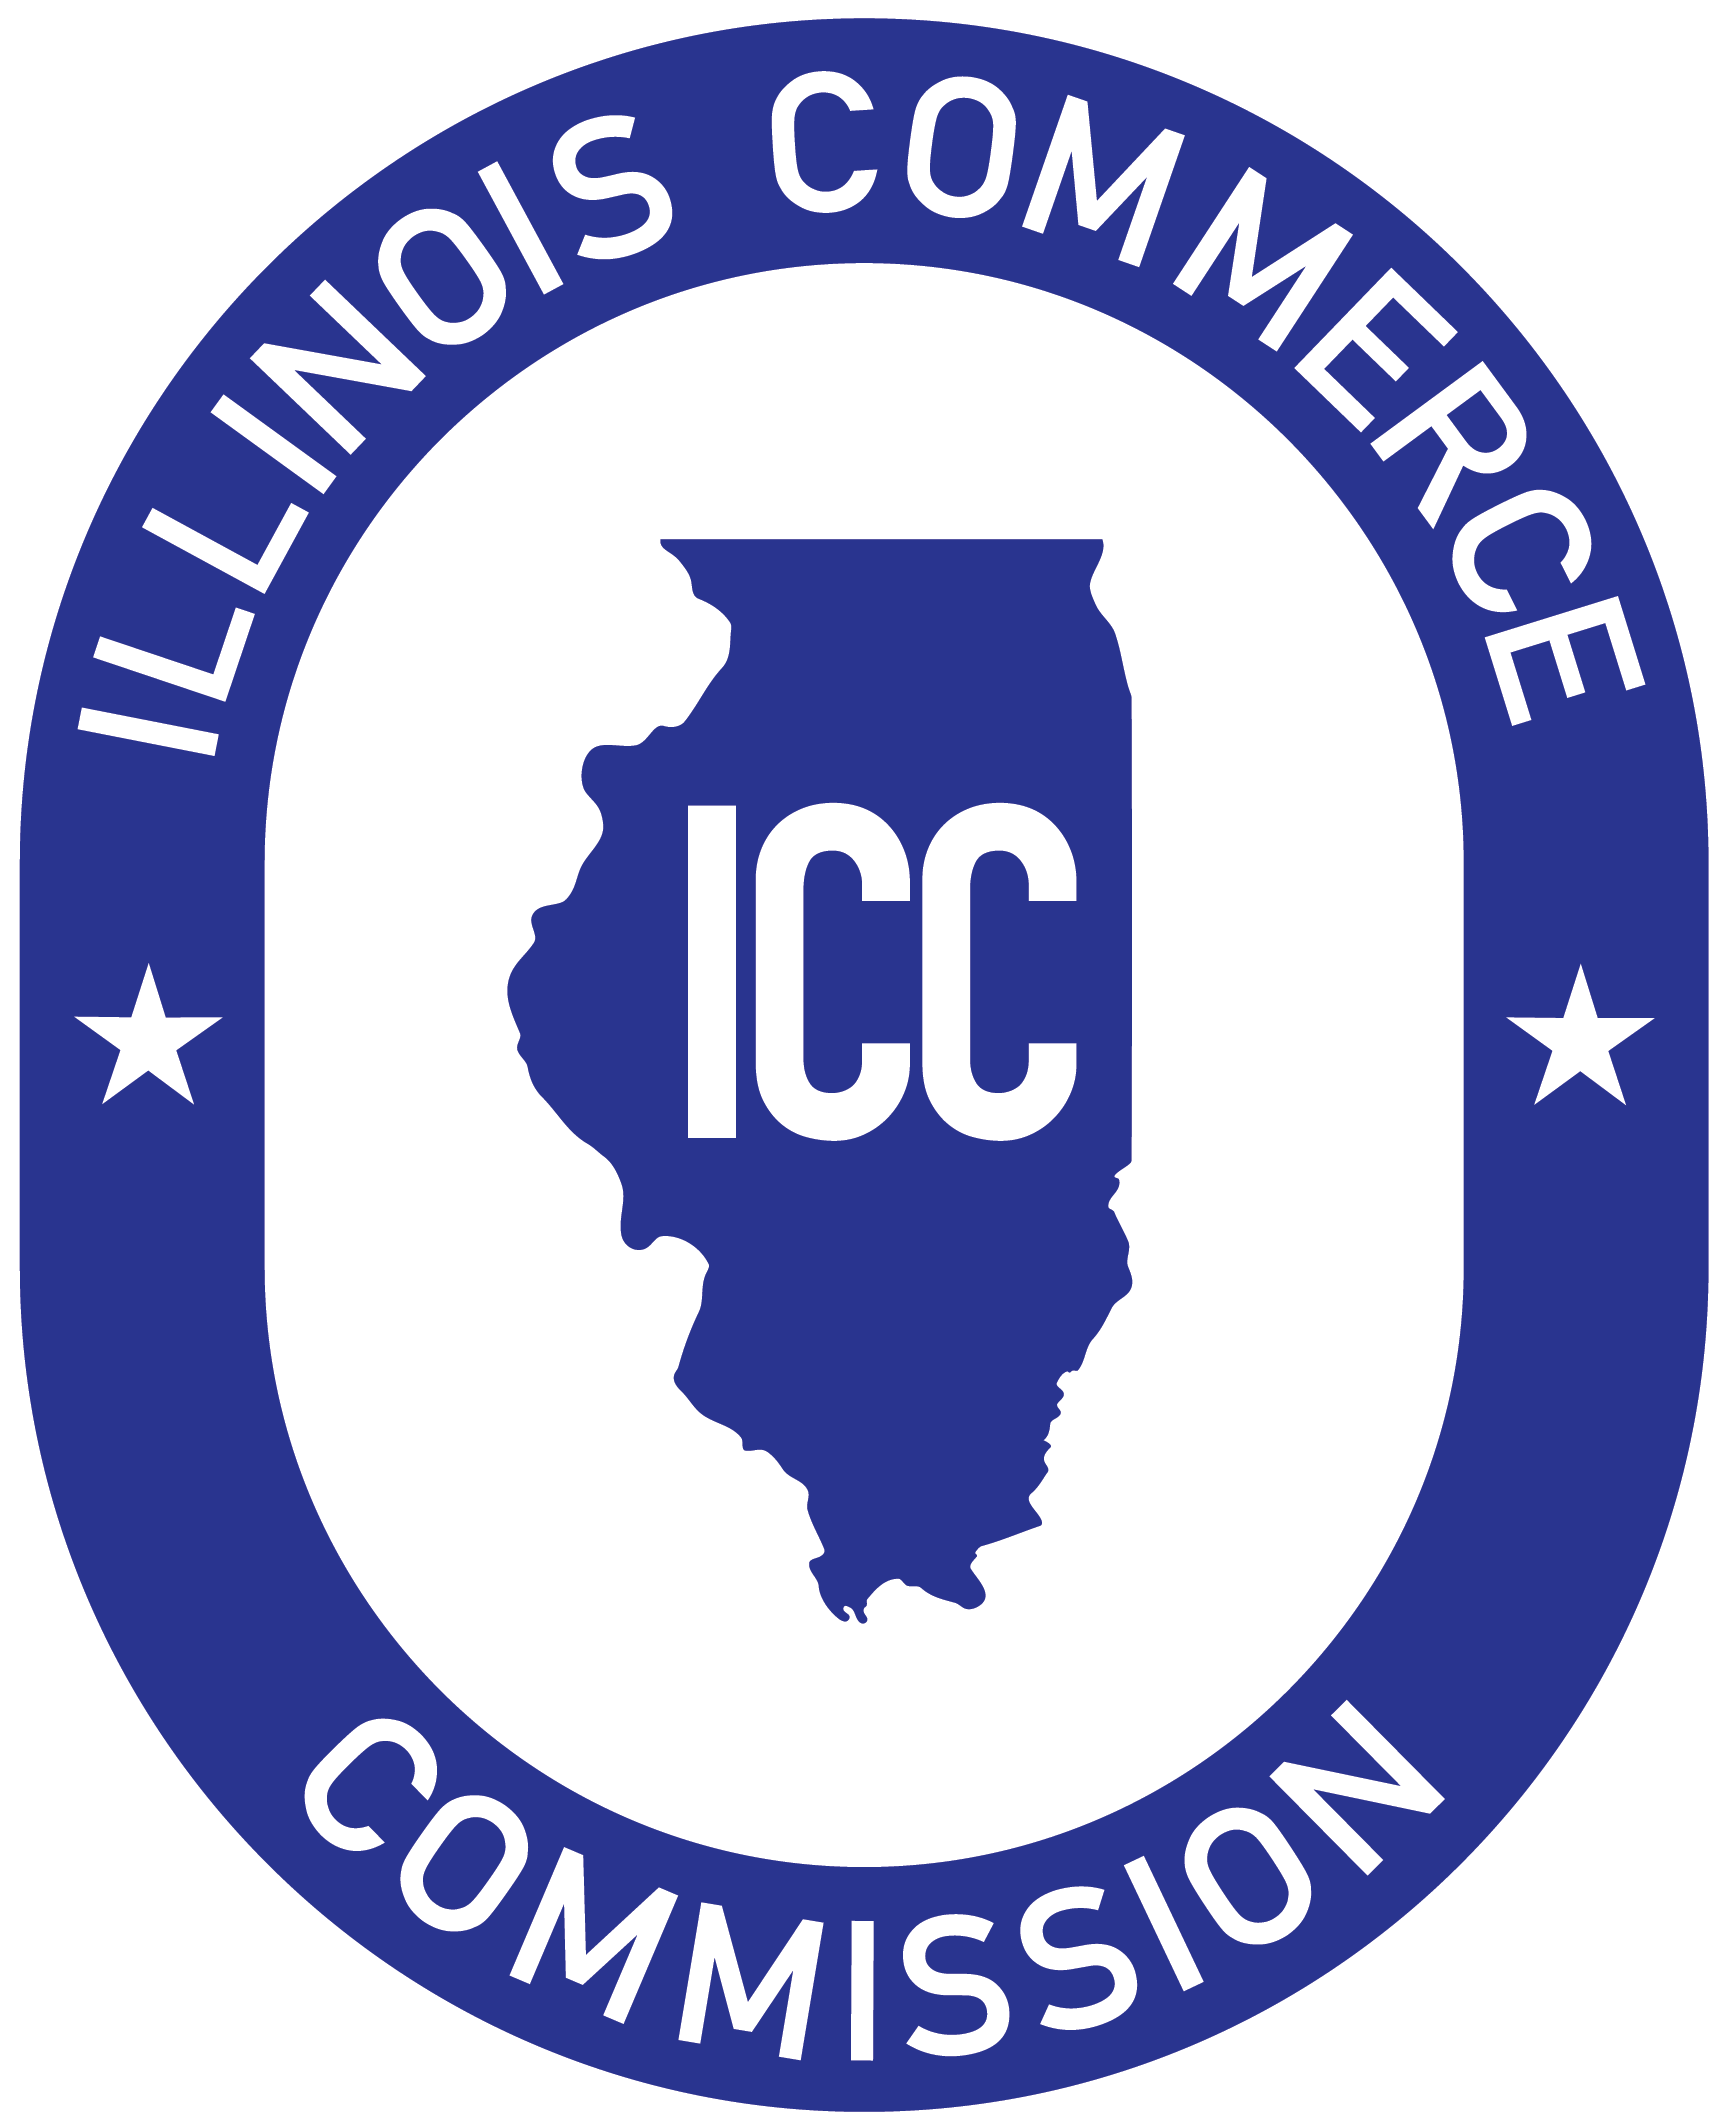 Illinois Commerce Commission